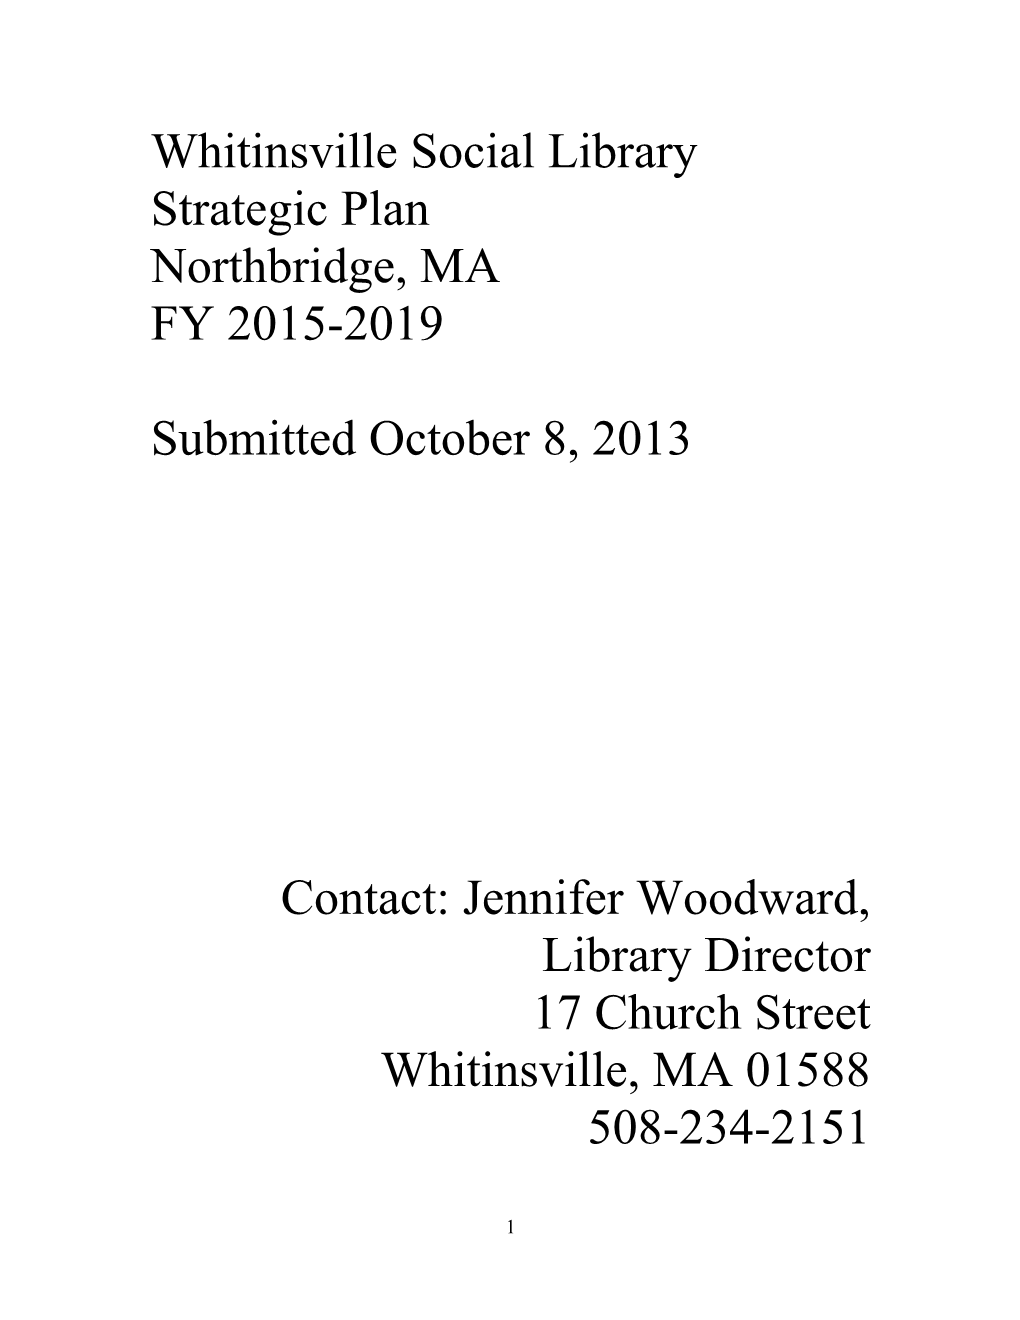 Whitinsville Social Library Strategic Plan